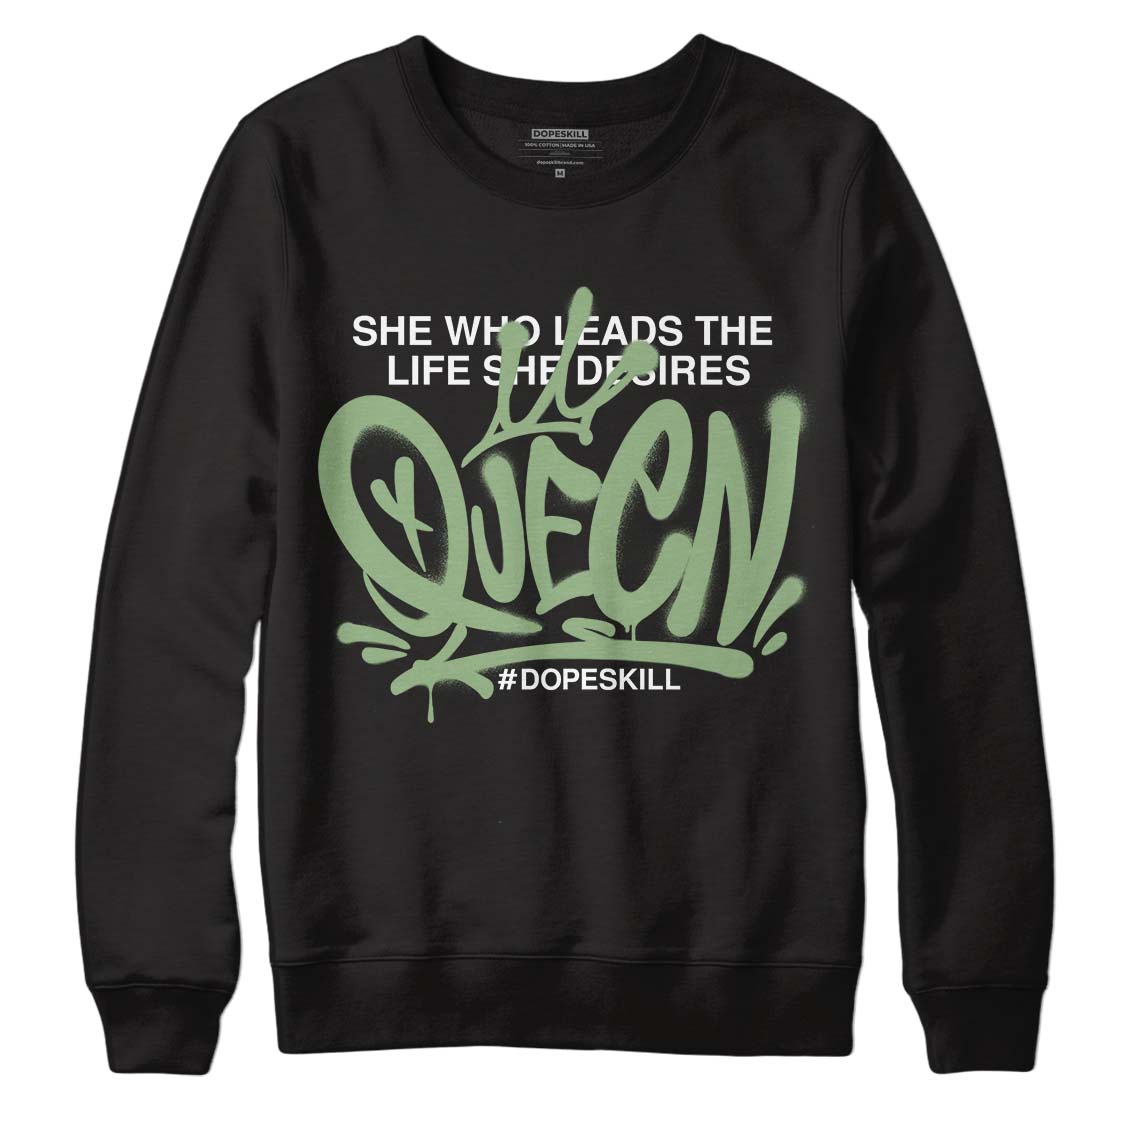 Jordan 4 Retro “Seafoam” DopeSkill Sweatshirt Queen Graphic Streetwear - Black 